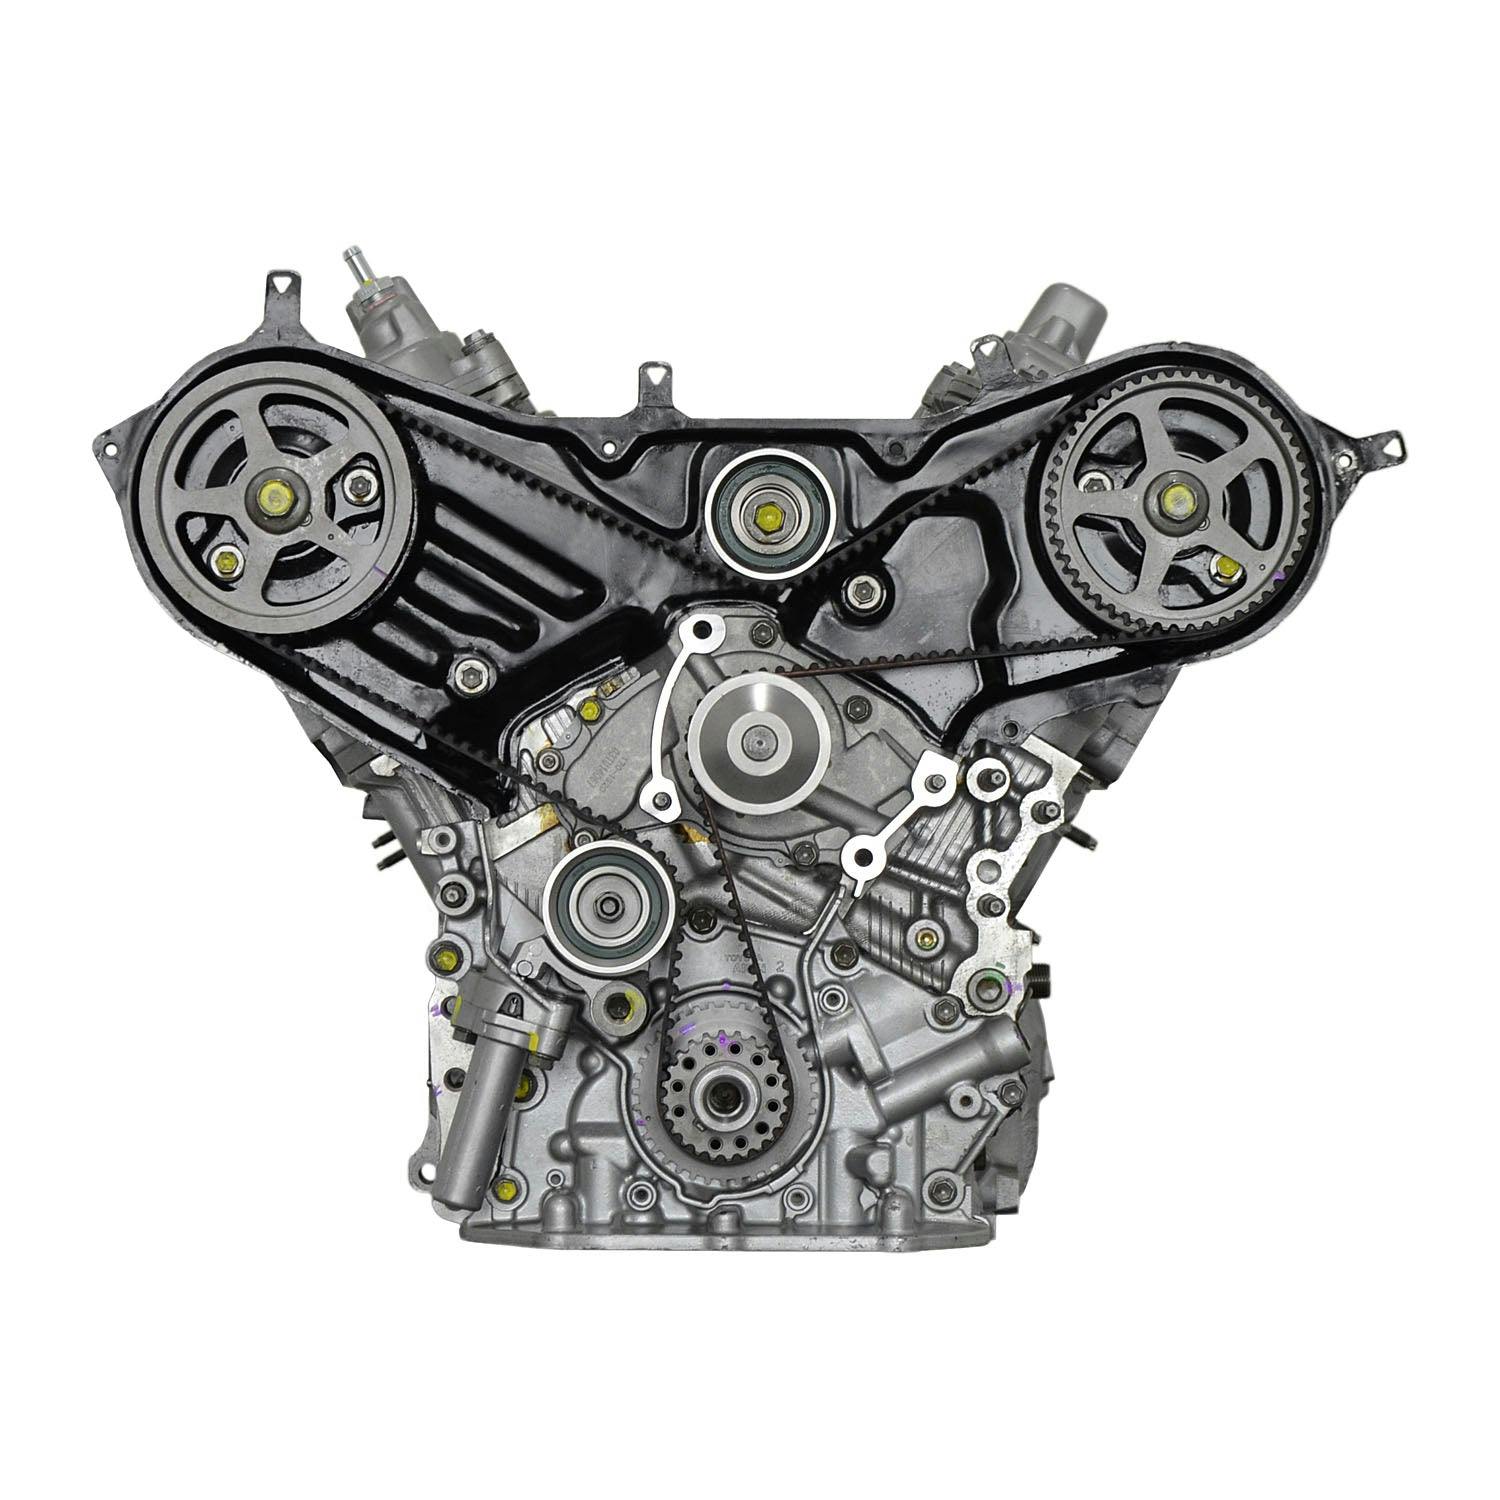 3L V6 Engine for 1994-2003 Lexus ES300/Toyota Avalon, Camry, Sienna, Solara